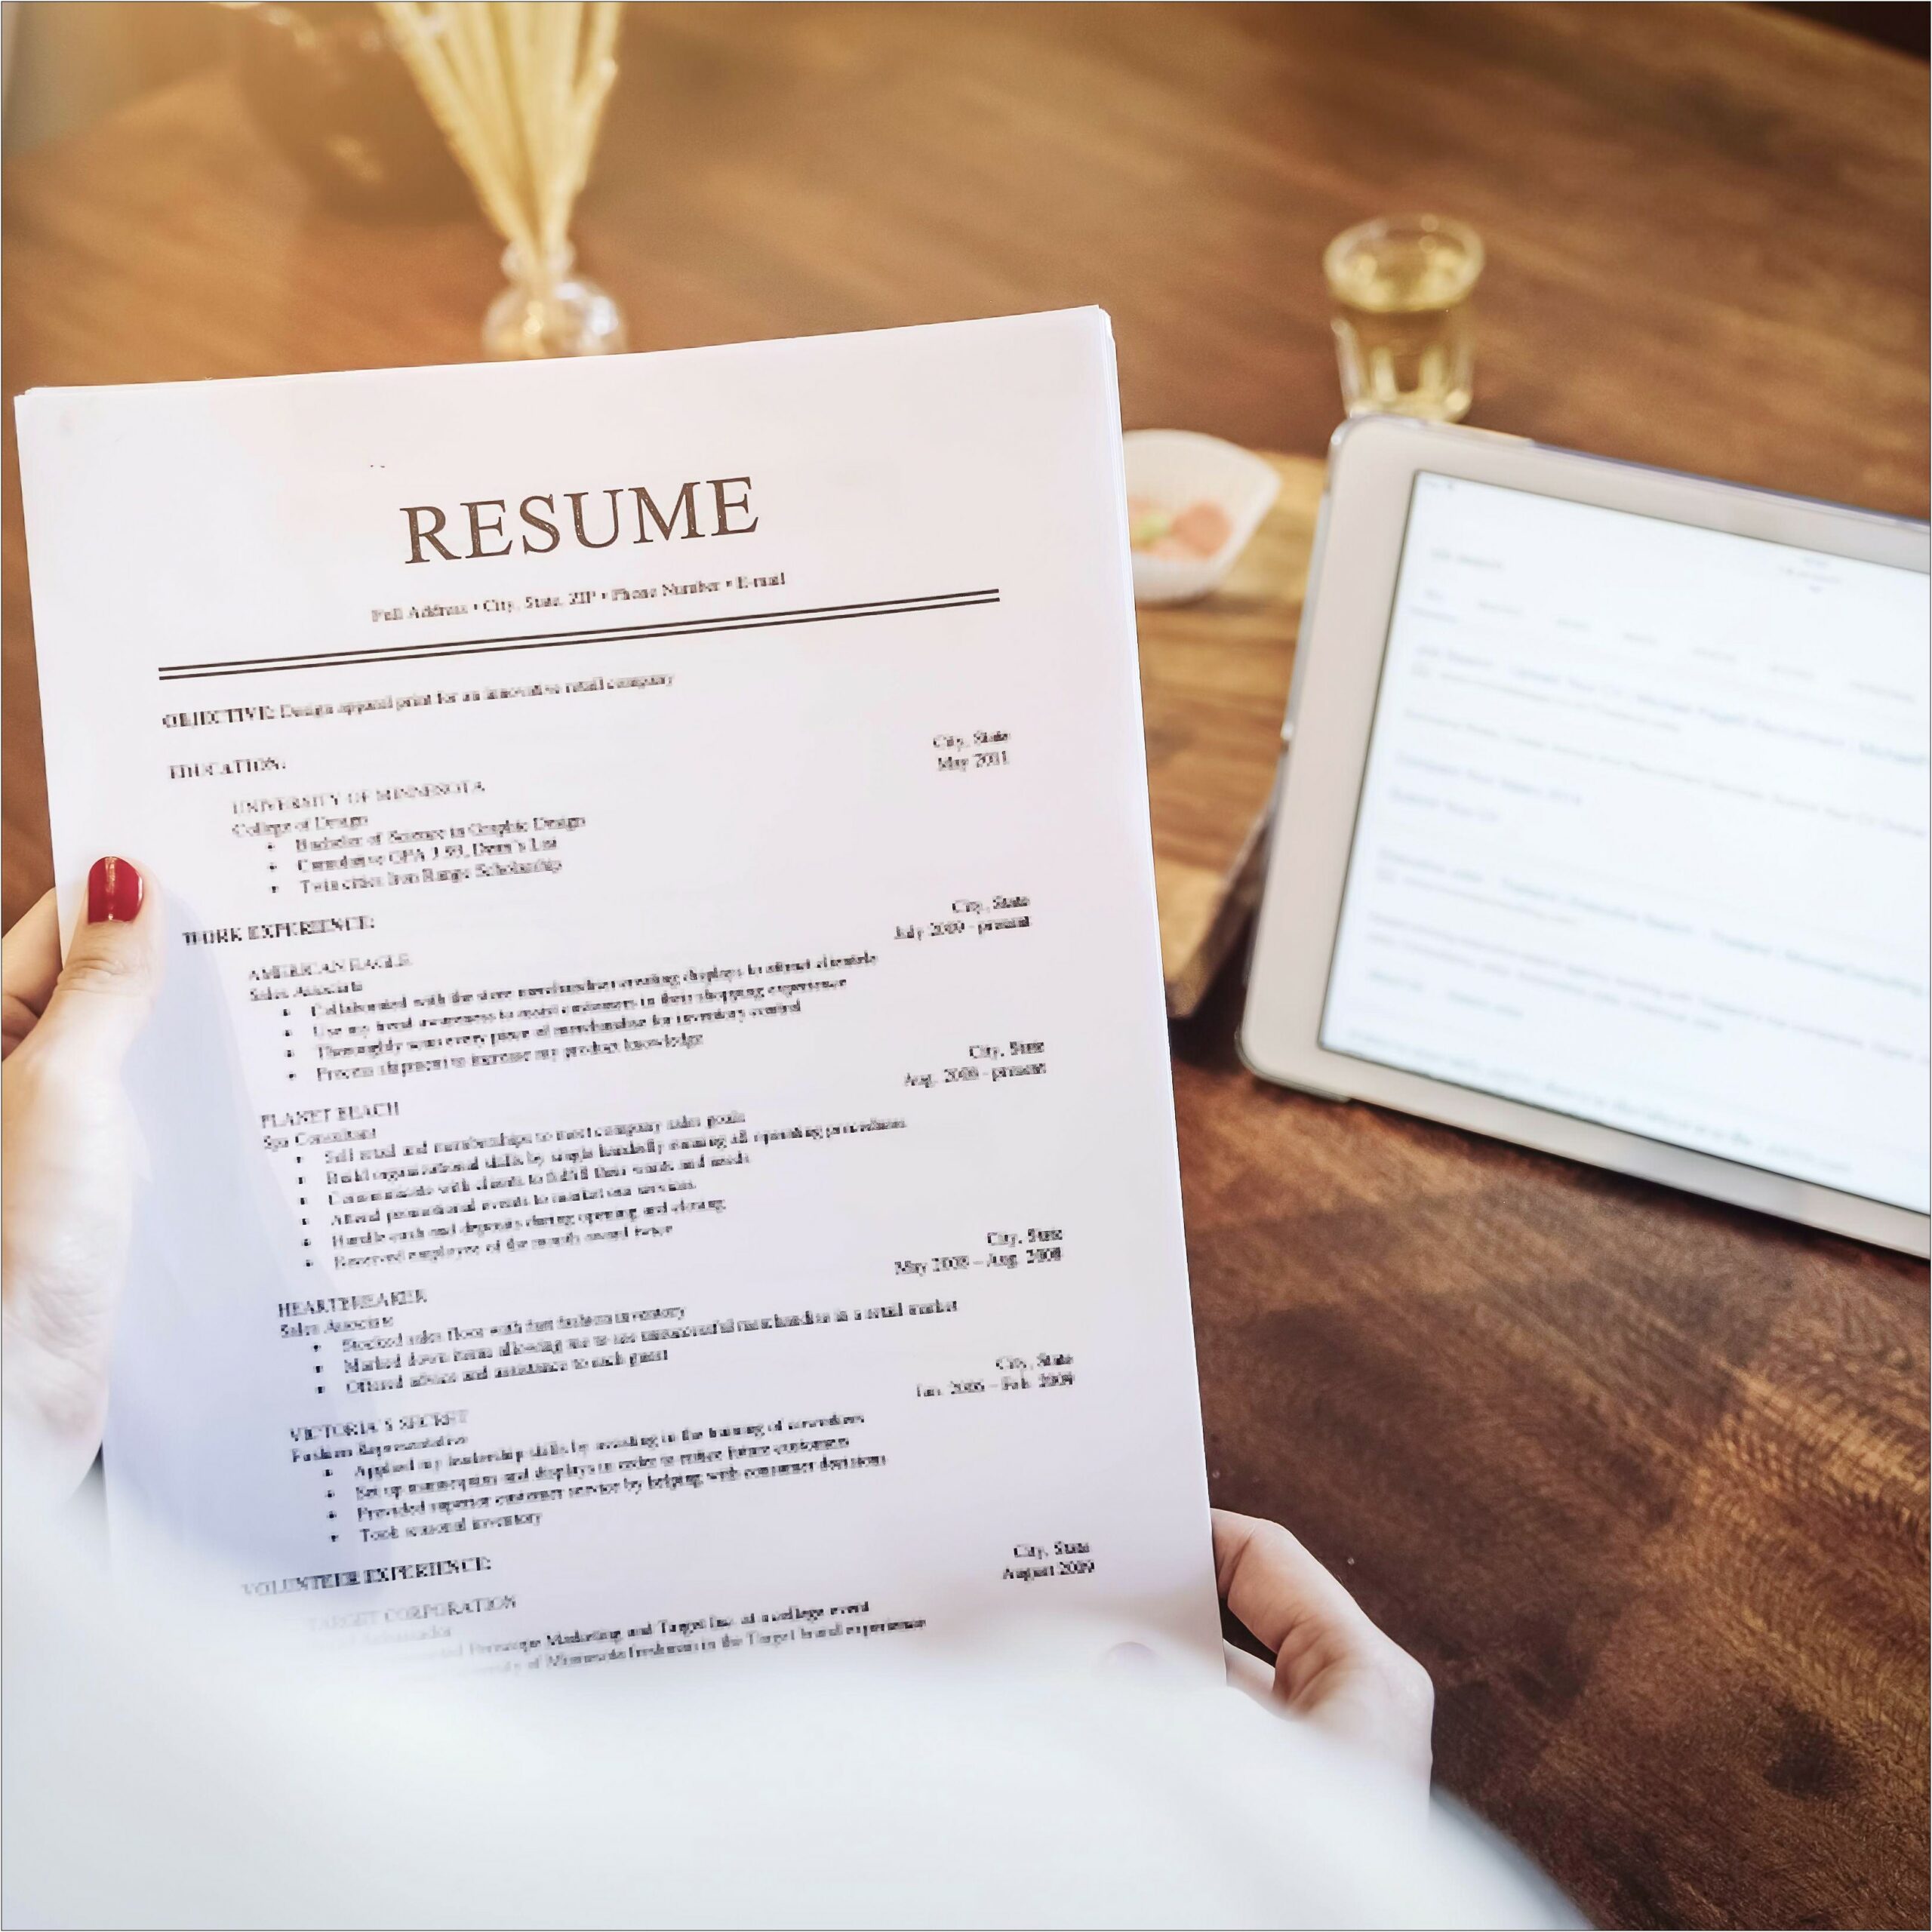 Resume Not Pick Up For Job